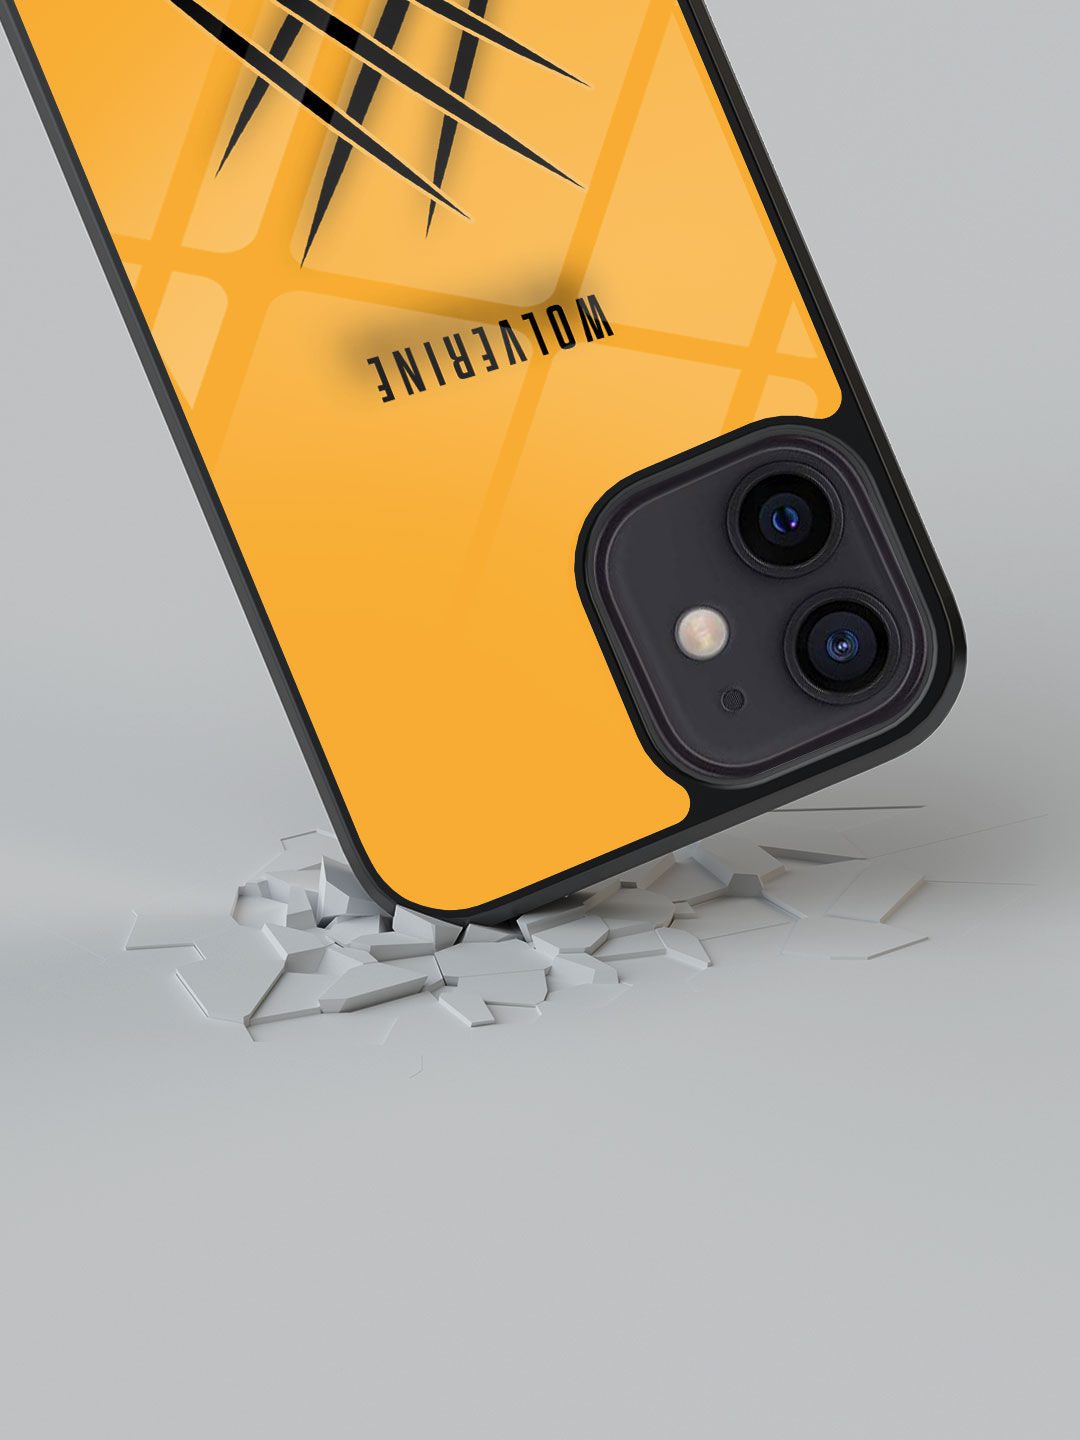 Minimalistic Wolverine - Glass Case For iPhone 12 Mini